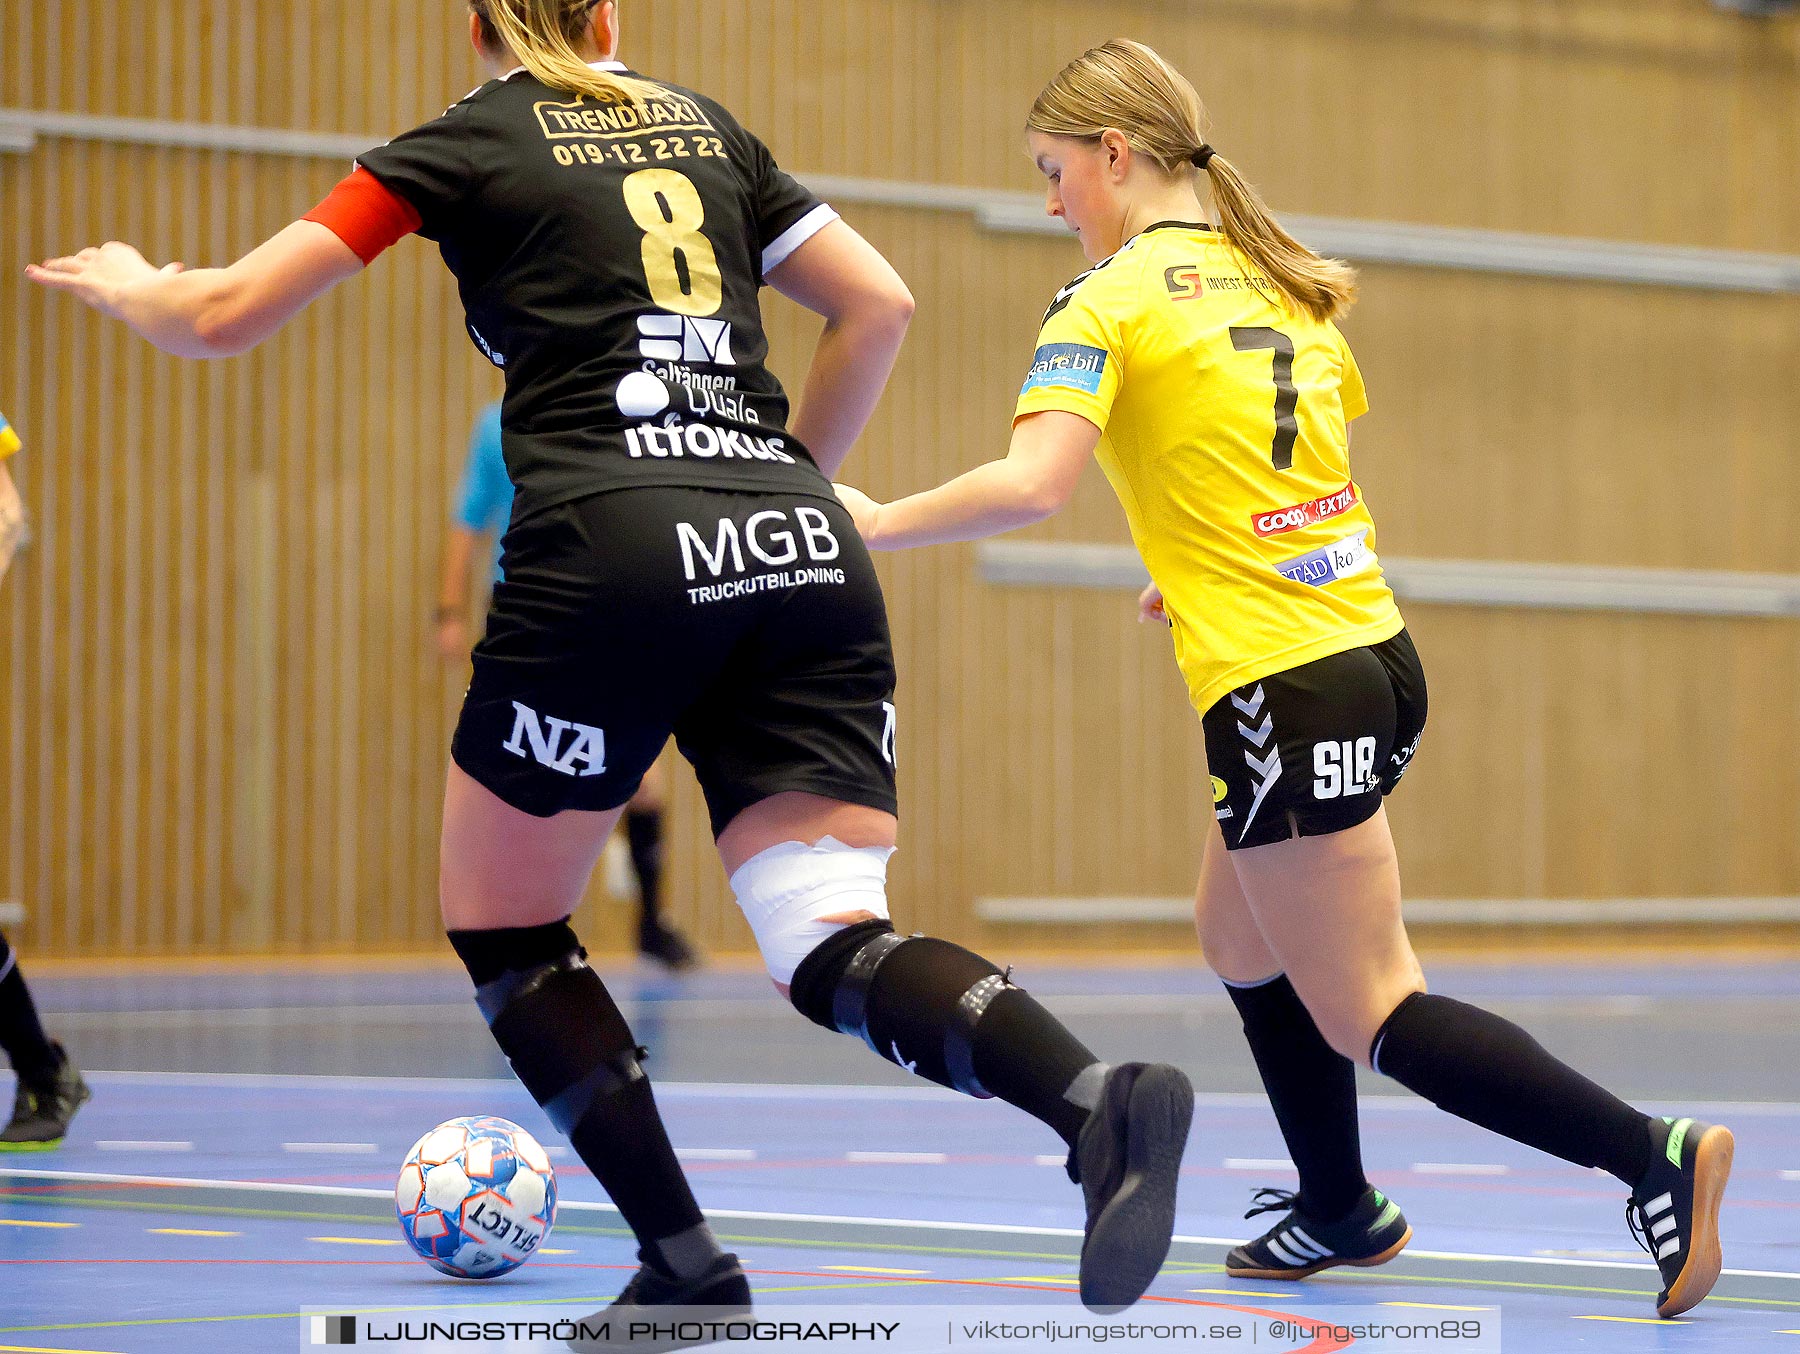 Skövde Futsalcup 2021 Damer Örebro Futsal Club-Skultorps IF 2,dam,Arena Skövde,Skövde,Sverige,Futsal,,2021,270499